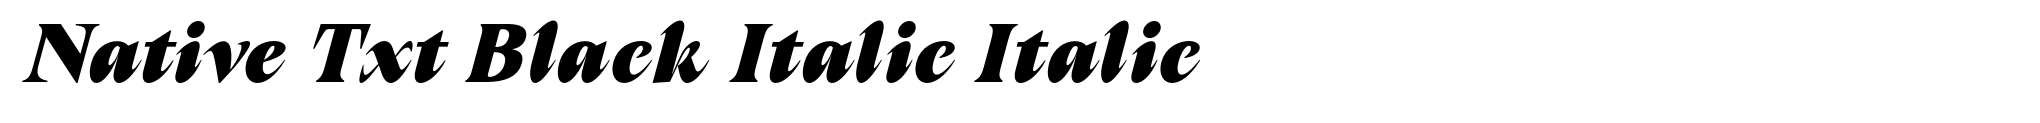 Native Txt Black Italic Italic image